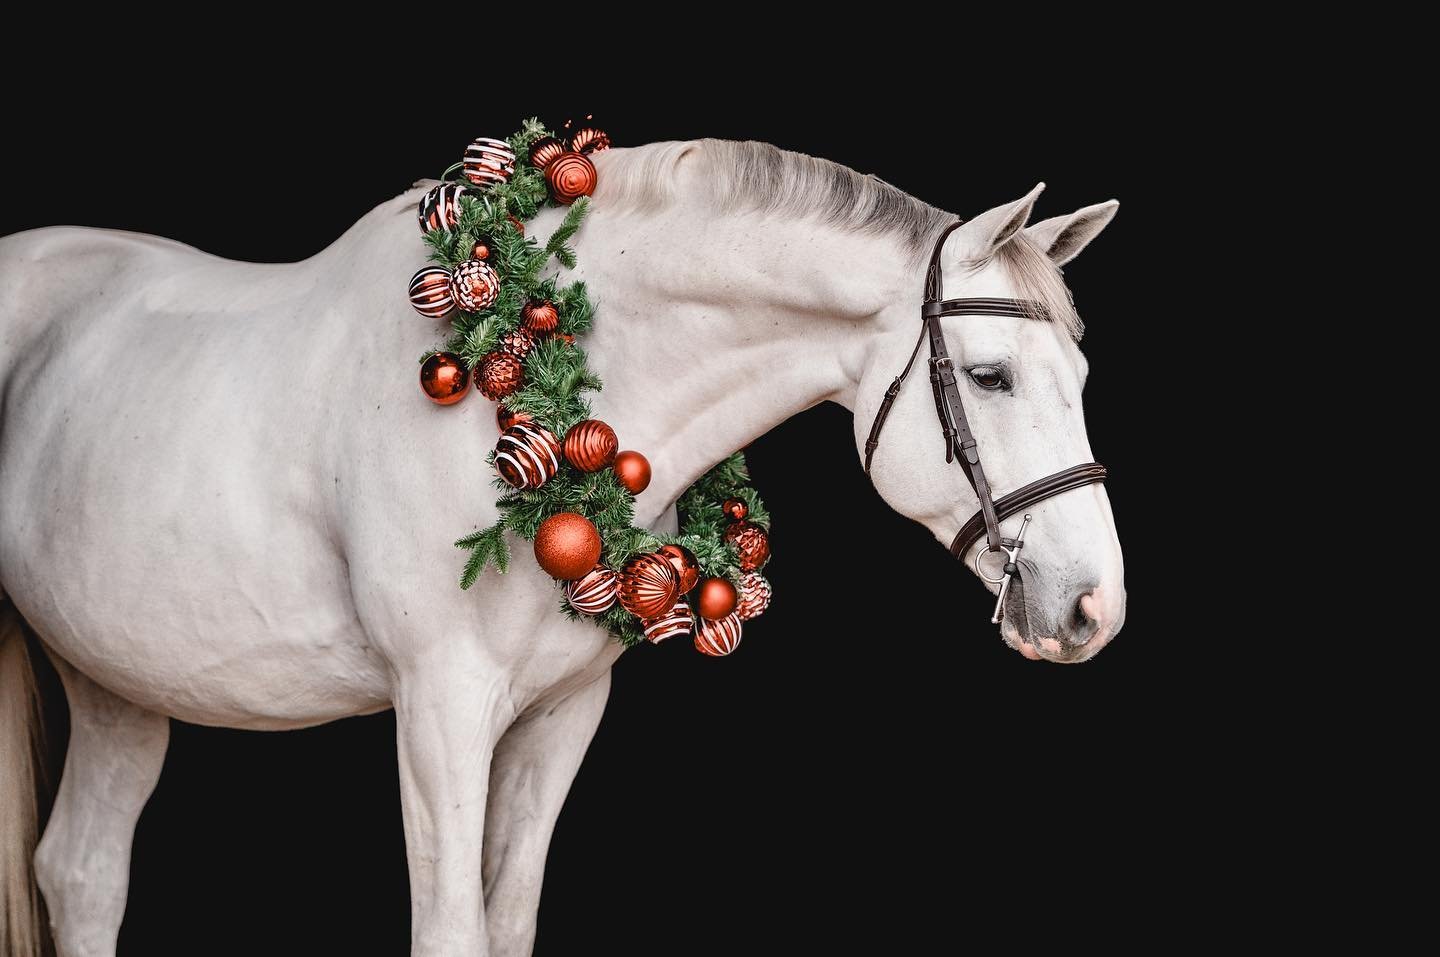 Merry Christmas Eve ! 🎄
.
.
.
#equestrianlife #horsephotographer #equinephotography #horsephotography #equestrianlifestyle